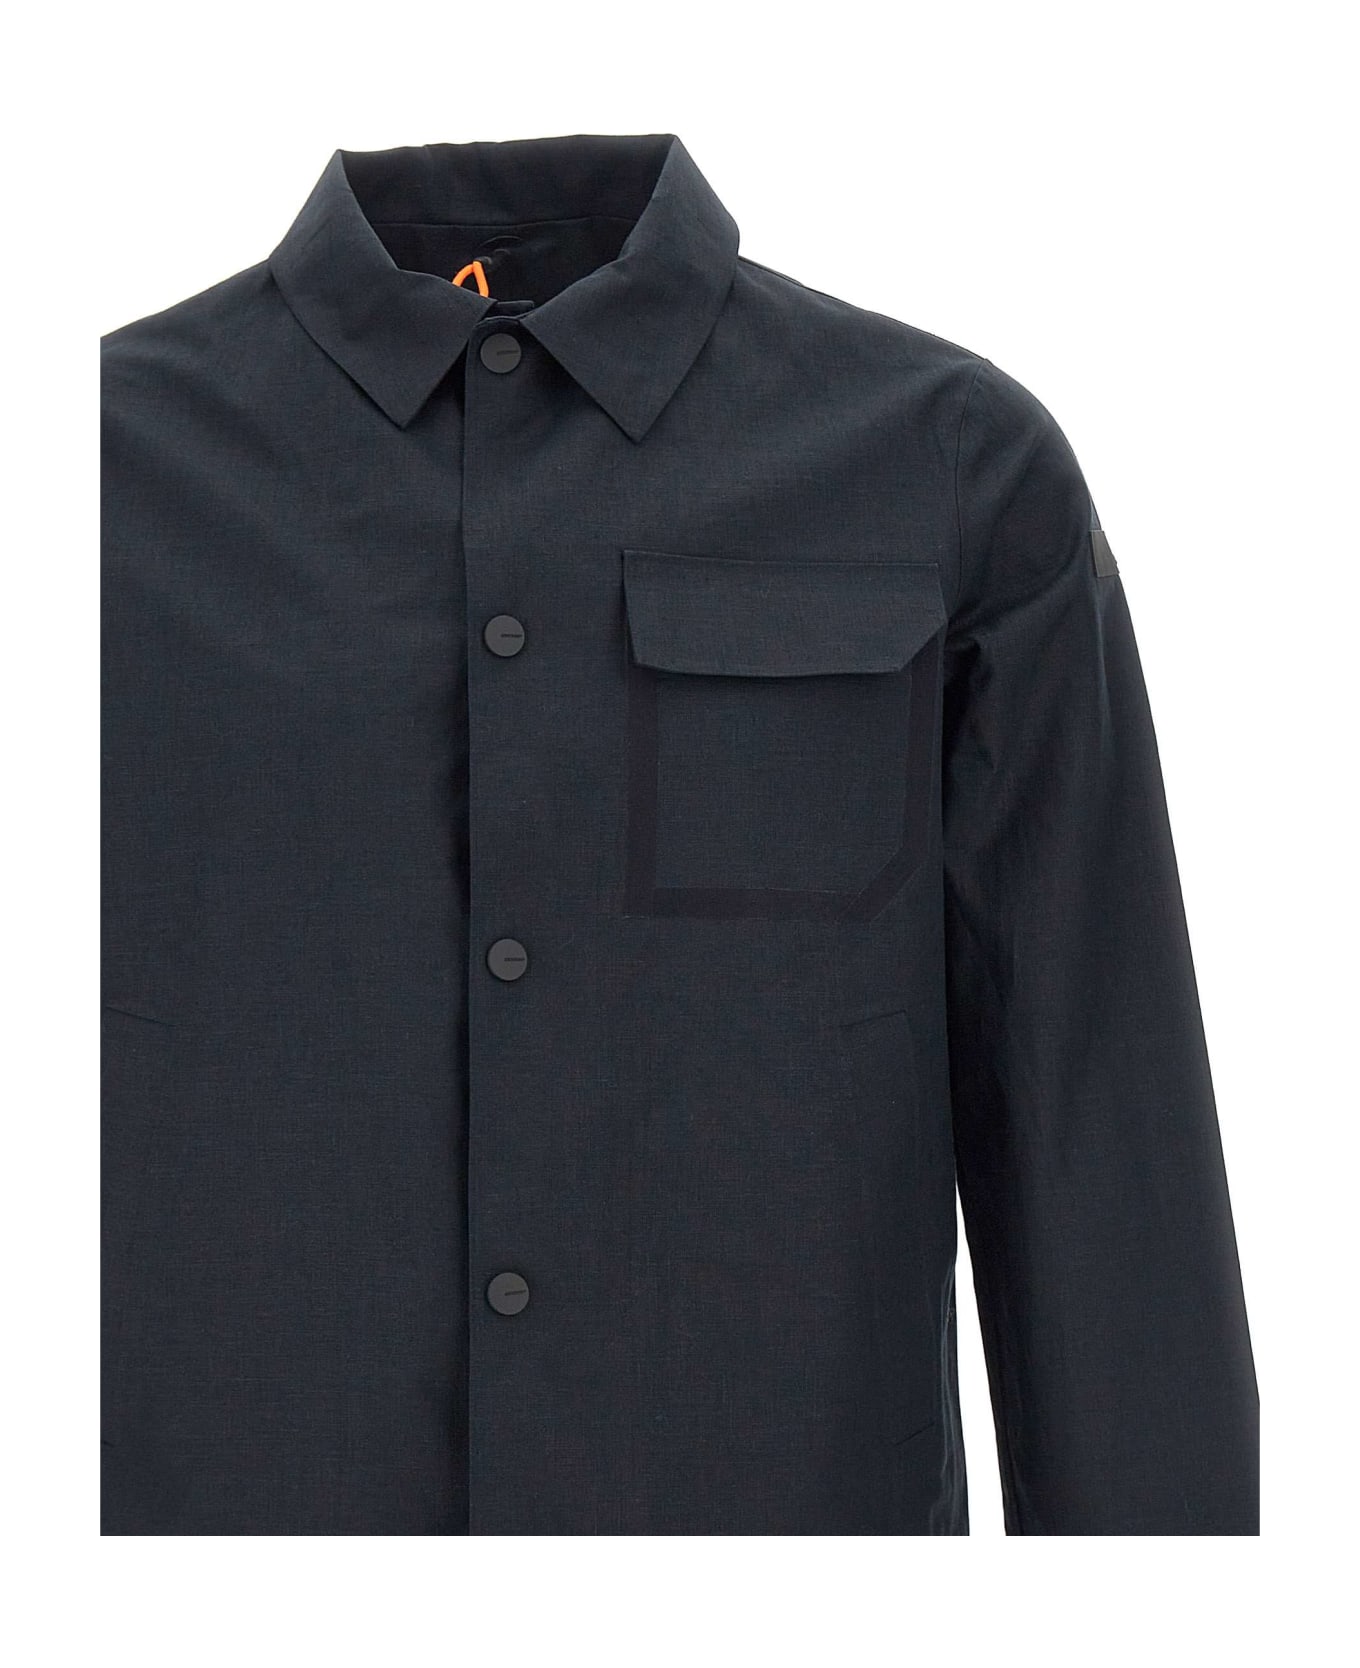 RRD - Roberto Ricci Design "terzilino Overshirt" Linen Jacket - BLUE ジャケット